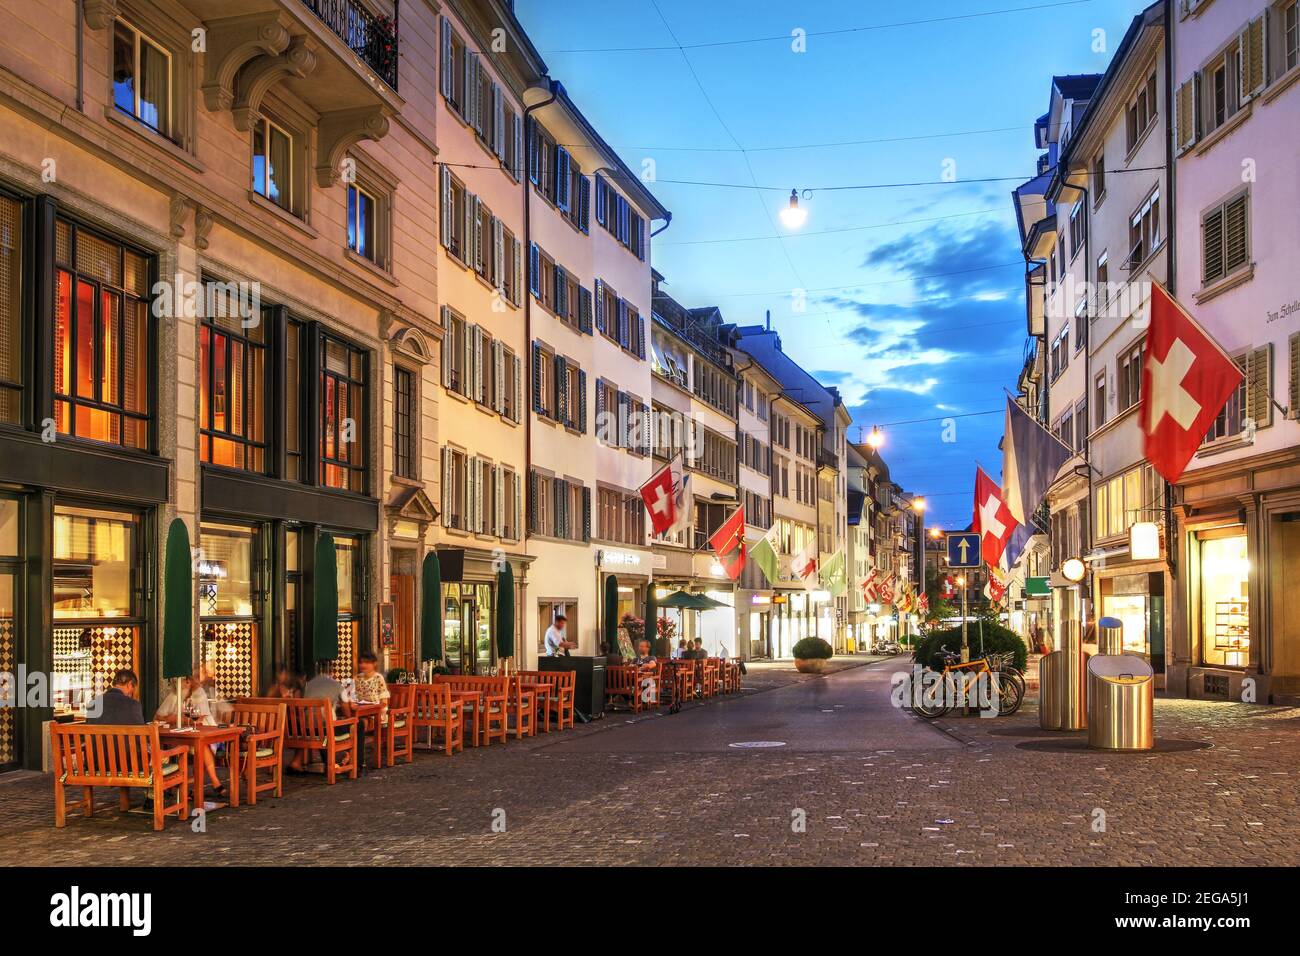 Evening scene along the historic medieval street of Rennweg, today part of the inner-city pedestrian zone of Zürich, Switzerland. Stock Photo